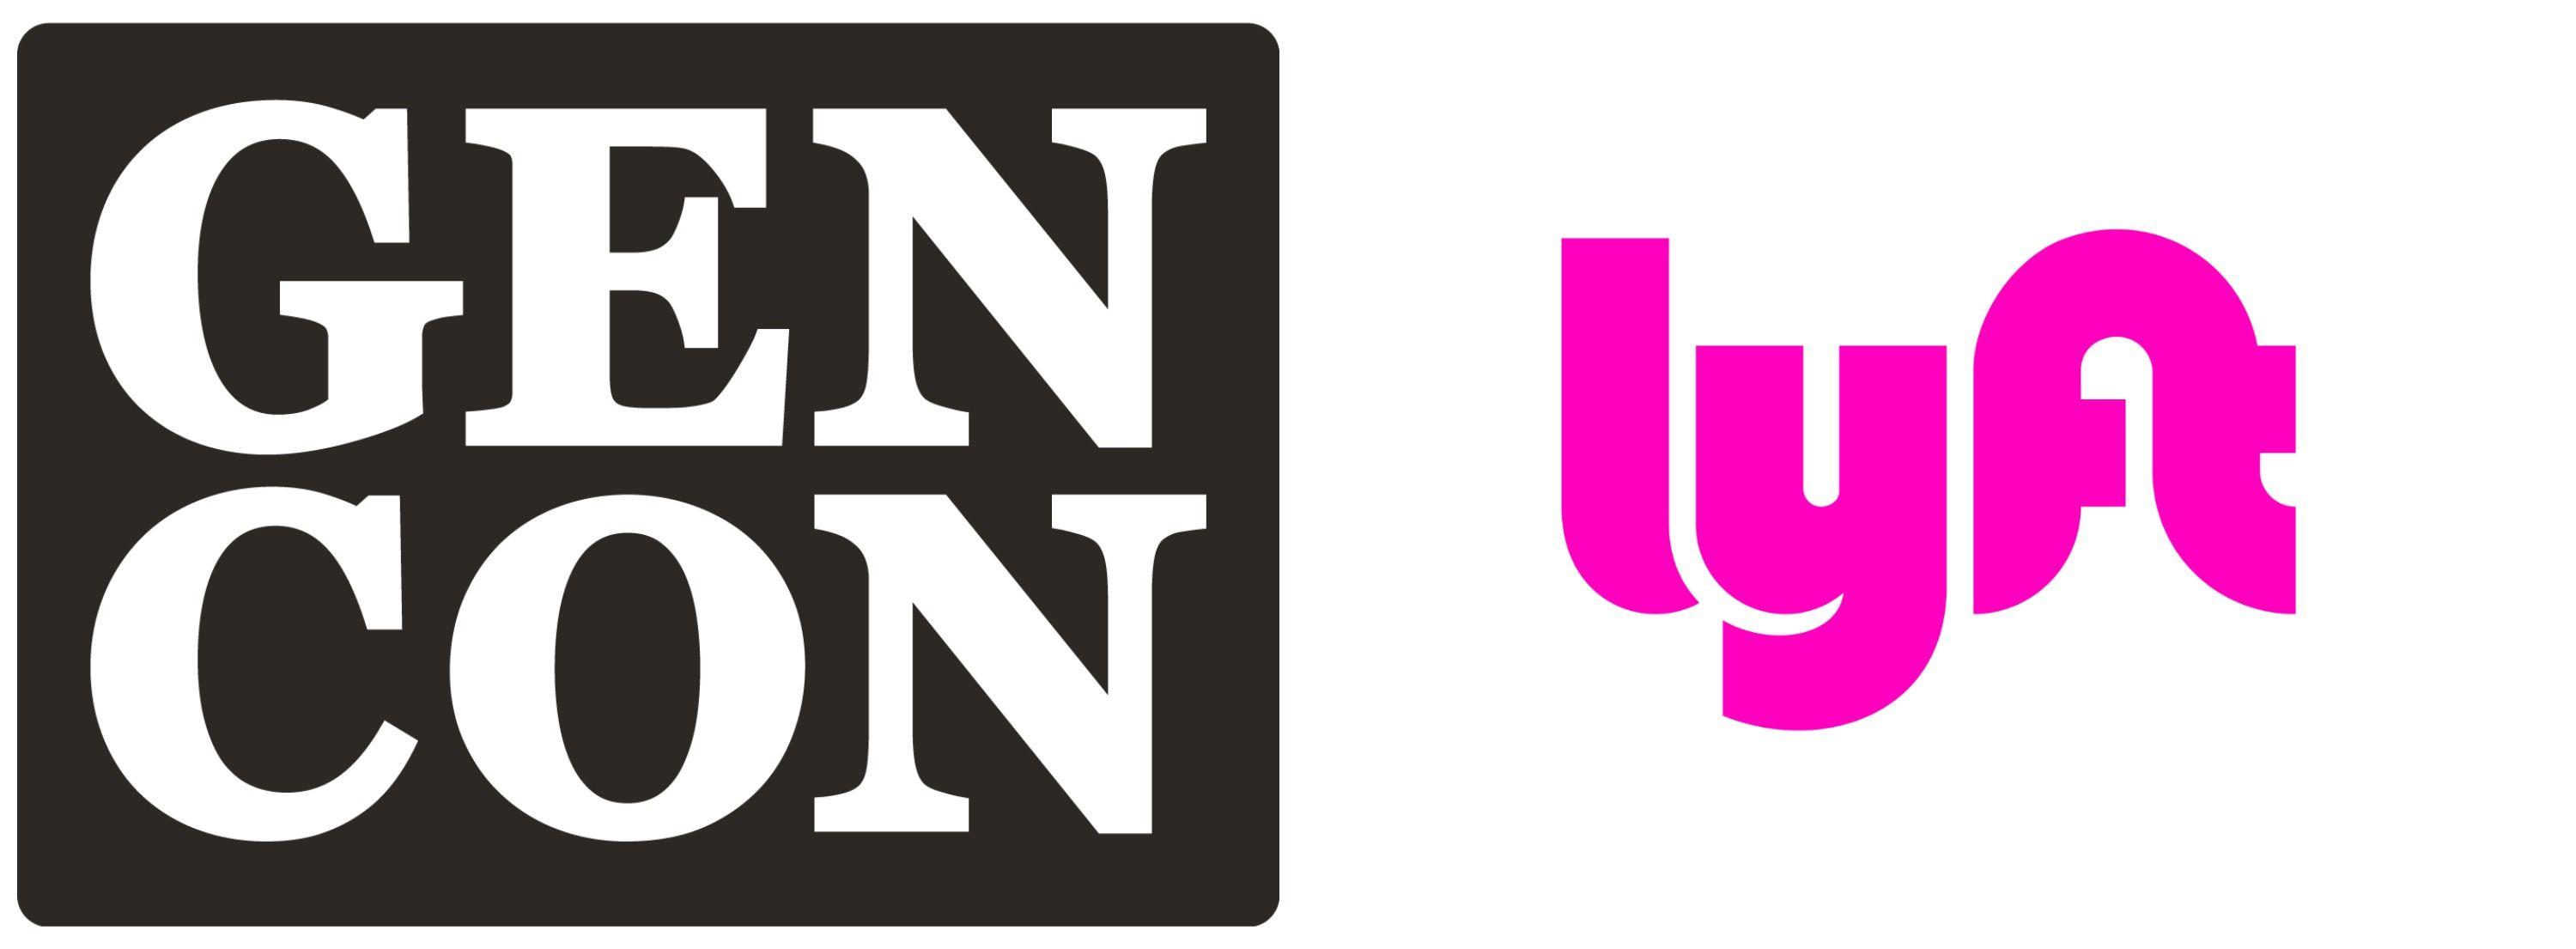 Official Lyft Logo - Gen Con Reaches Agreement with Lyft as Official Rideshare Partner ...